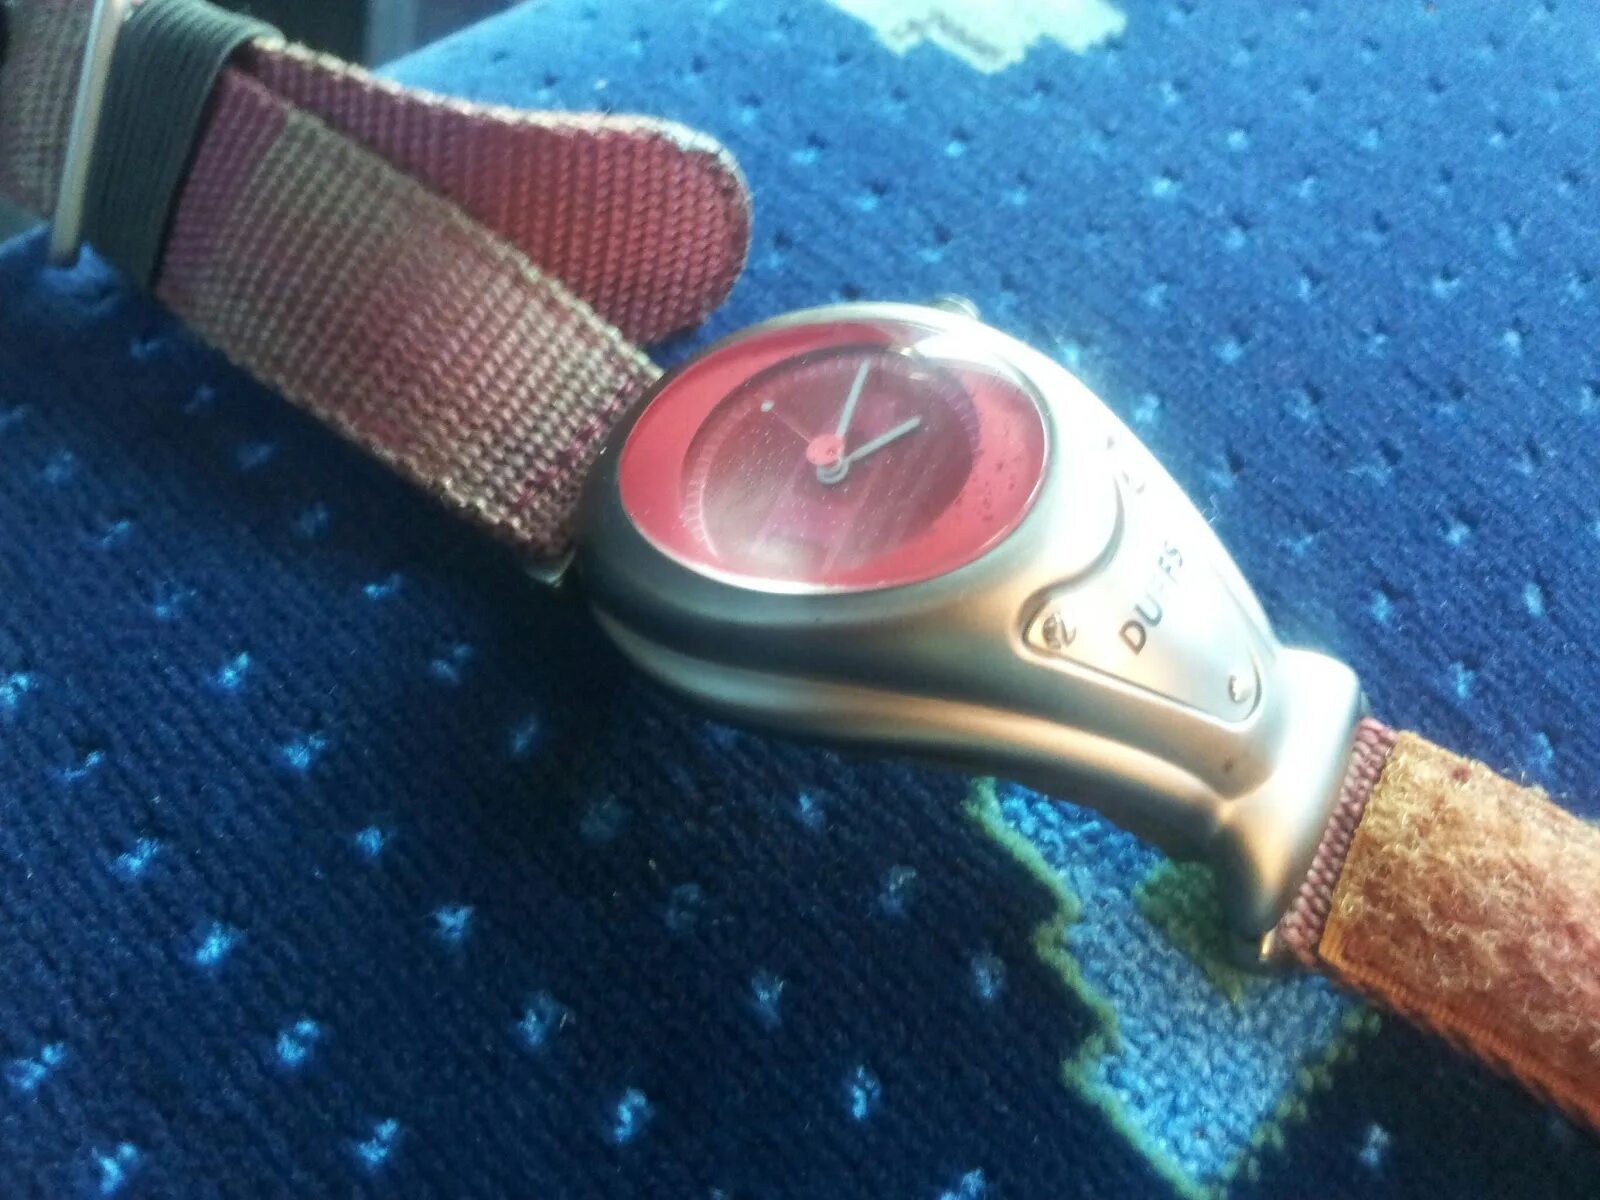 Nordic Seaside часы наручные Nordic. Часы IMC Manufactoria цена. Lund Lille купить часы. Цена часов Sentra z1303. Side watch